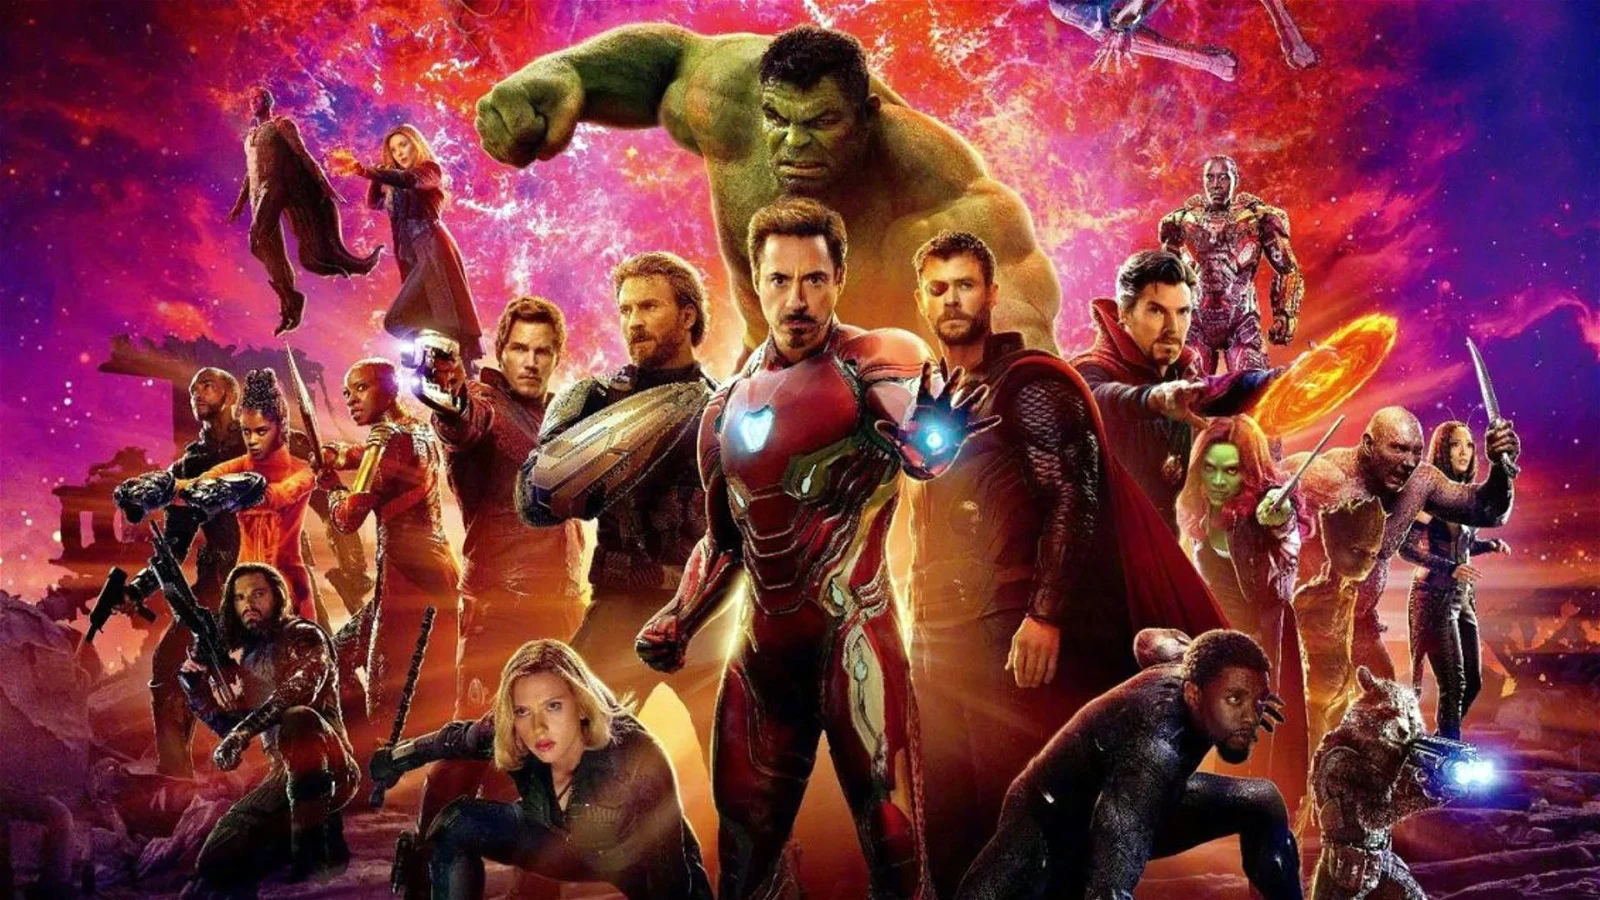 Marvel movies are not art, say critics